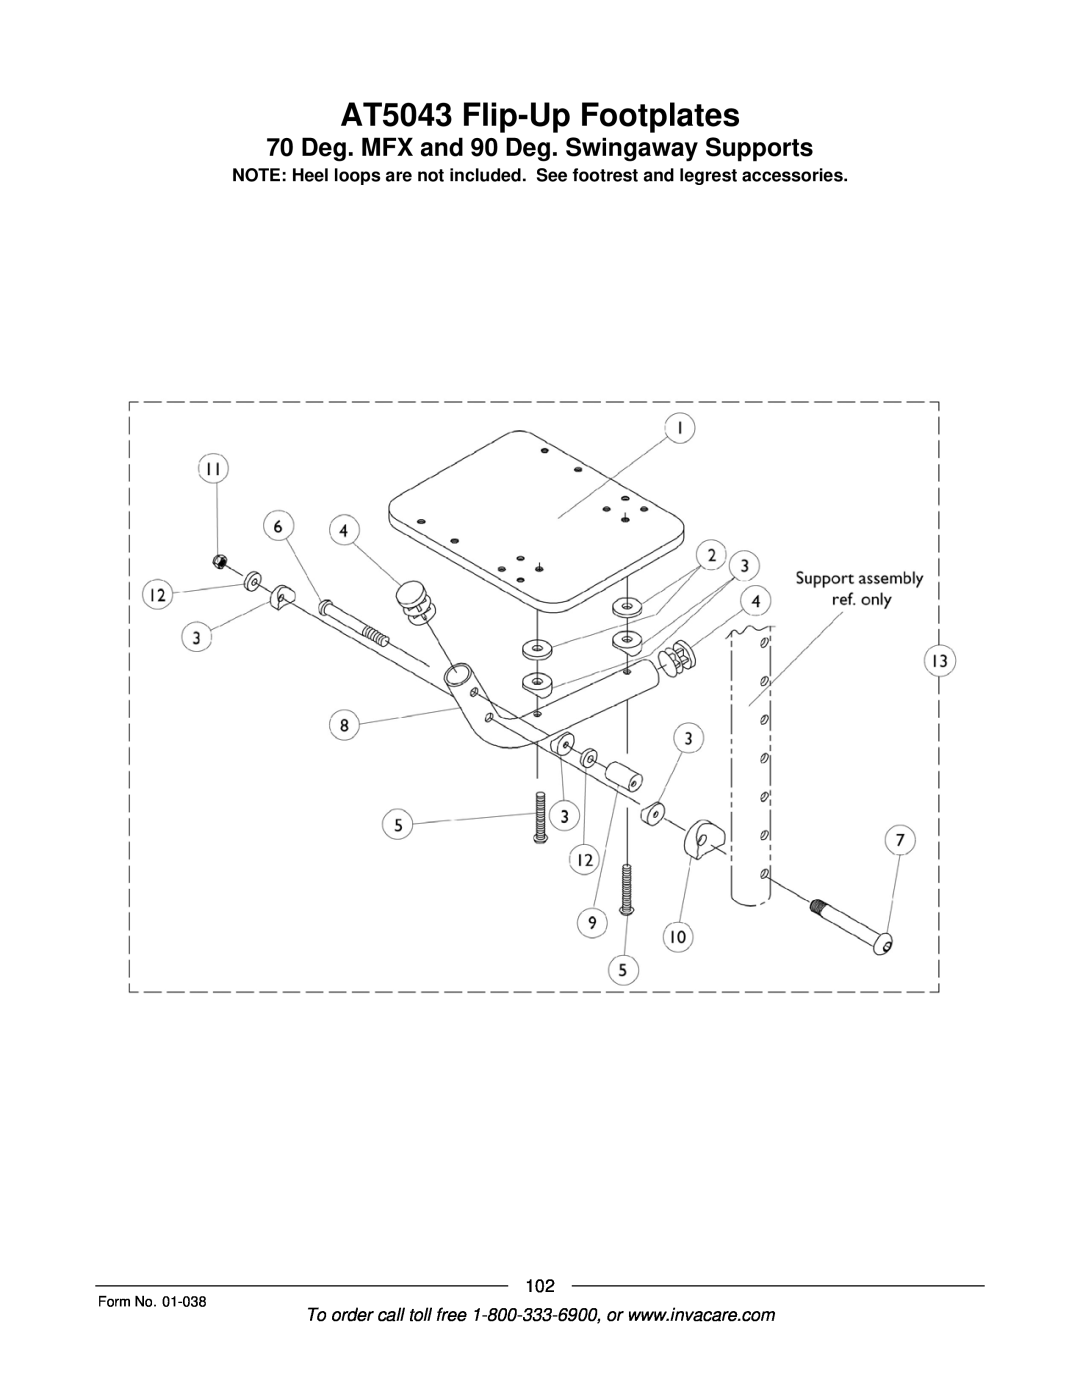 Invacare ESS-PTO, PTO-STM manual AT5043 Flip-Up Footplates, 70 Deg. MFX and 90 Deg. Swingaway Supports, Form No 